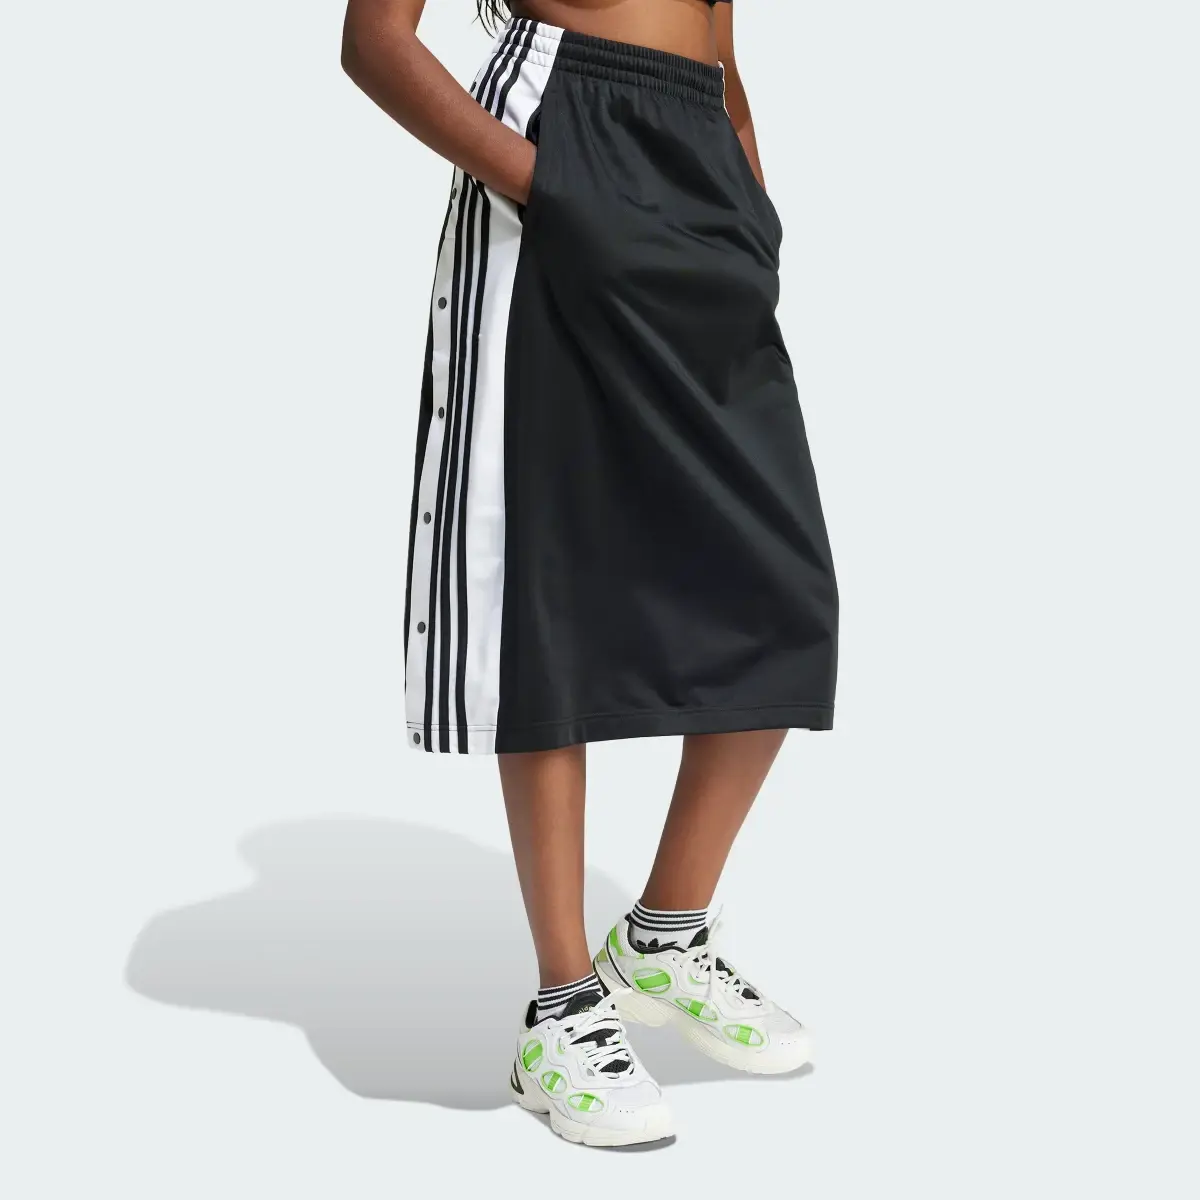 Adidas Adibreak Skirt. 3